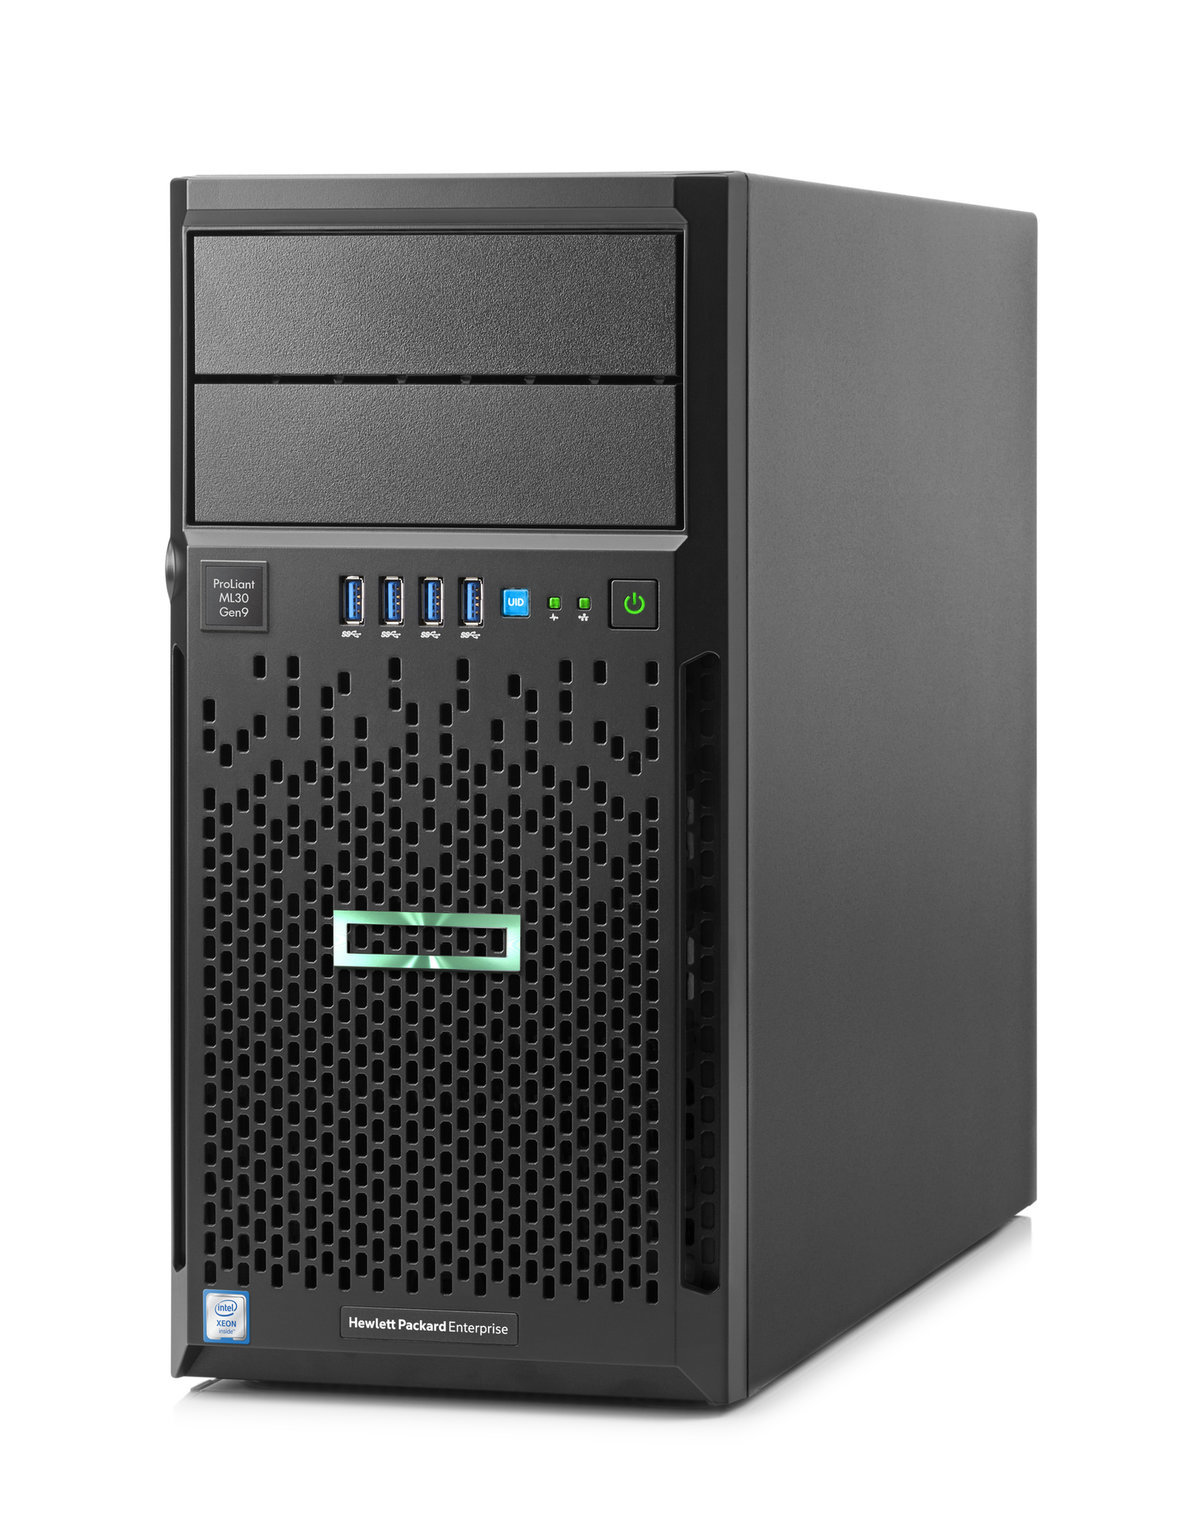 Сервер HP Proliant ML30 Gen9, 1x E3-1240v6 4C 3.7GHz, 1x16Gb-U, B140i/ZM (RAID 1+0/5/5+0) noHDD (8 SFF 2.5quot; HP) 1x 460W (up2), 2x 1Gb/s, noDVD, iLO5, Tower-4U, 3-1-1 P03707-425